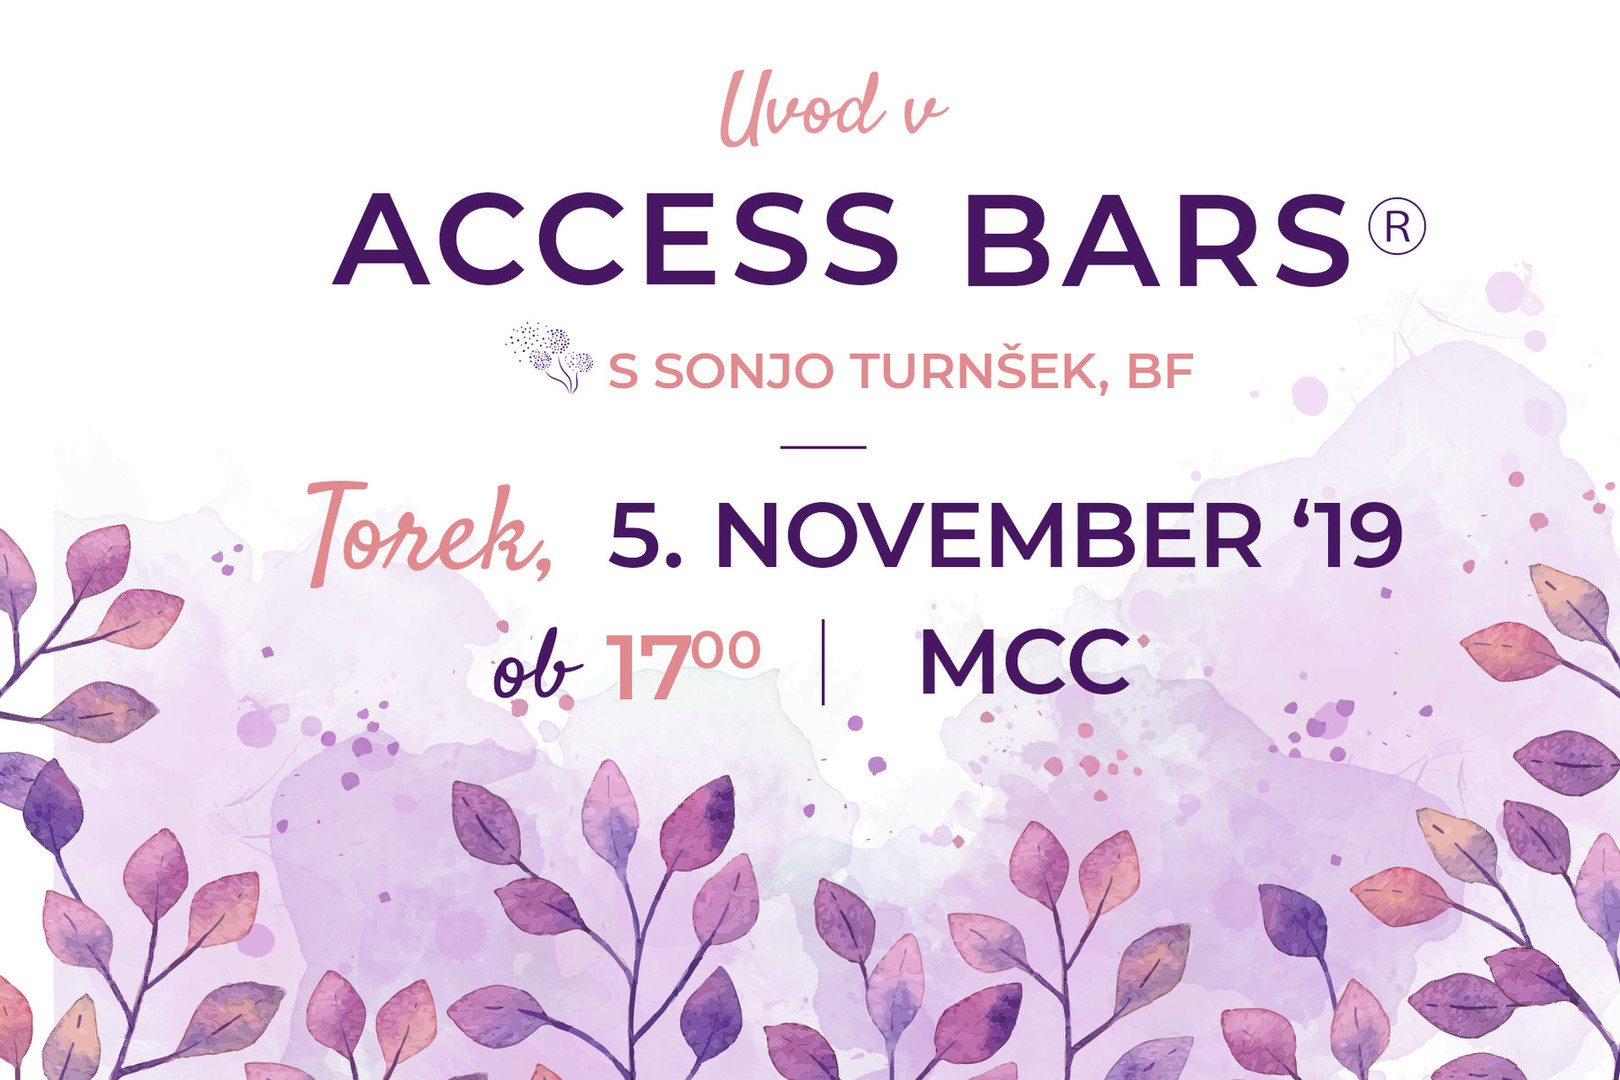 Uvod v Access Bars®